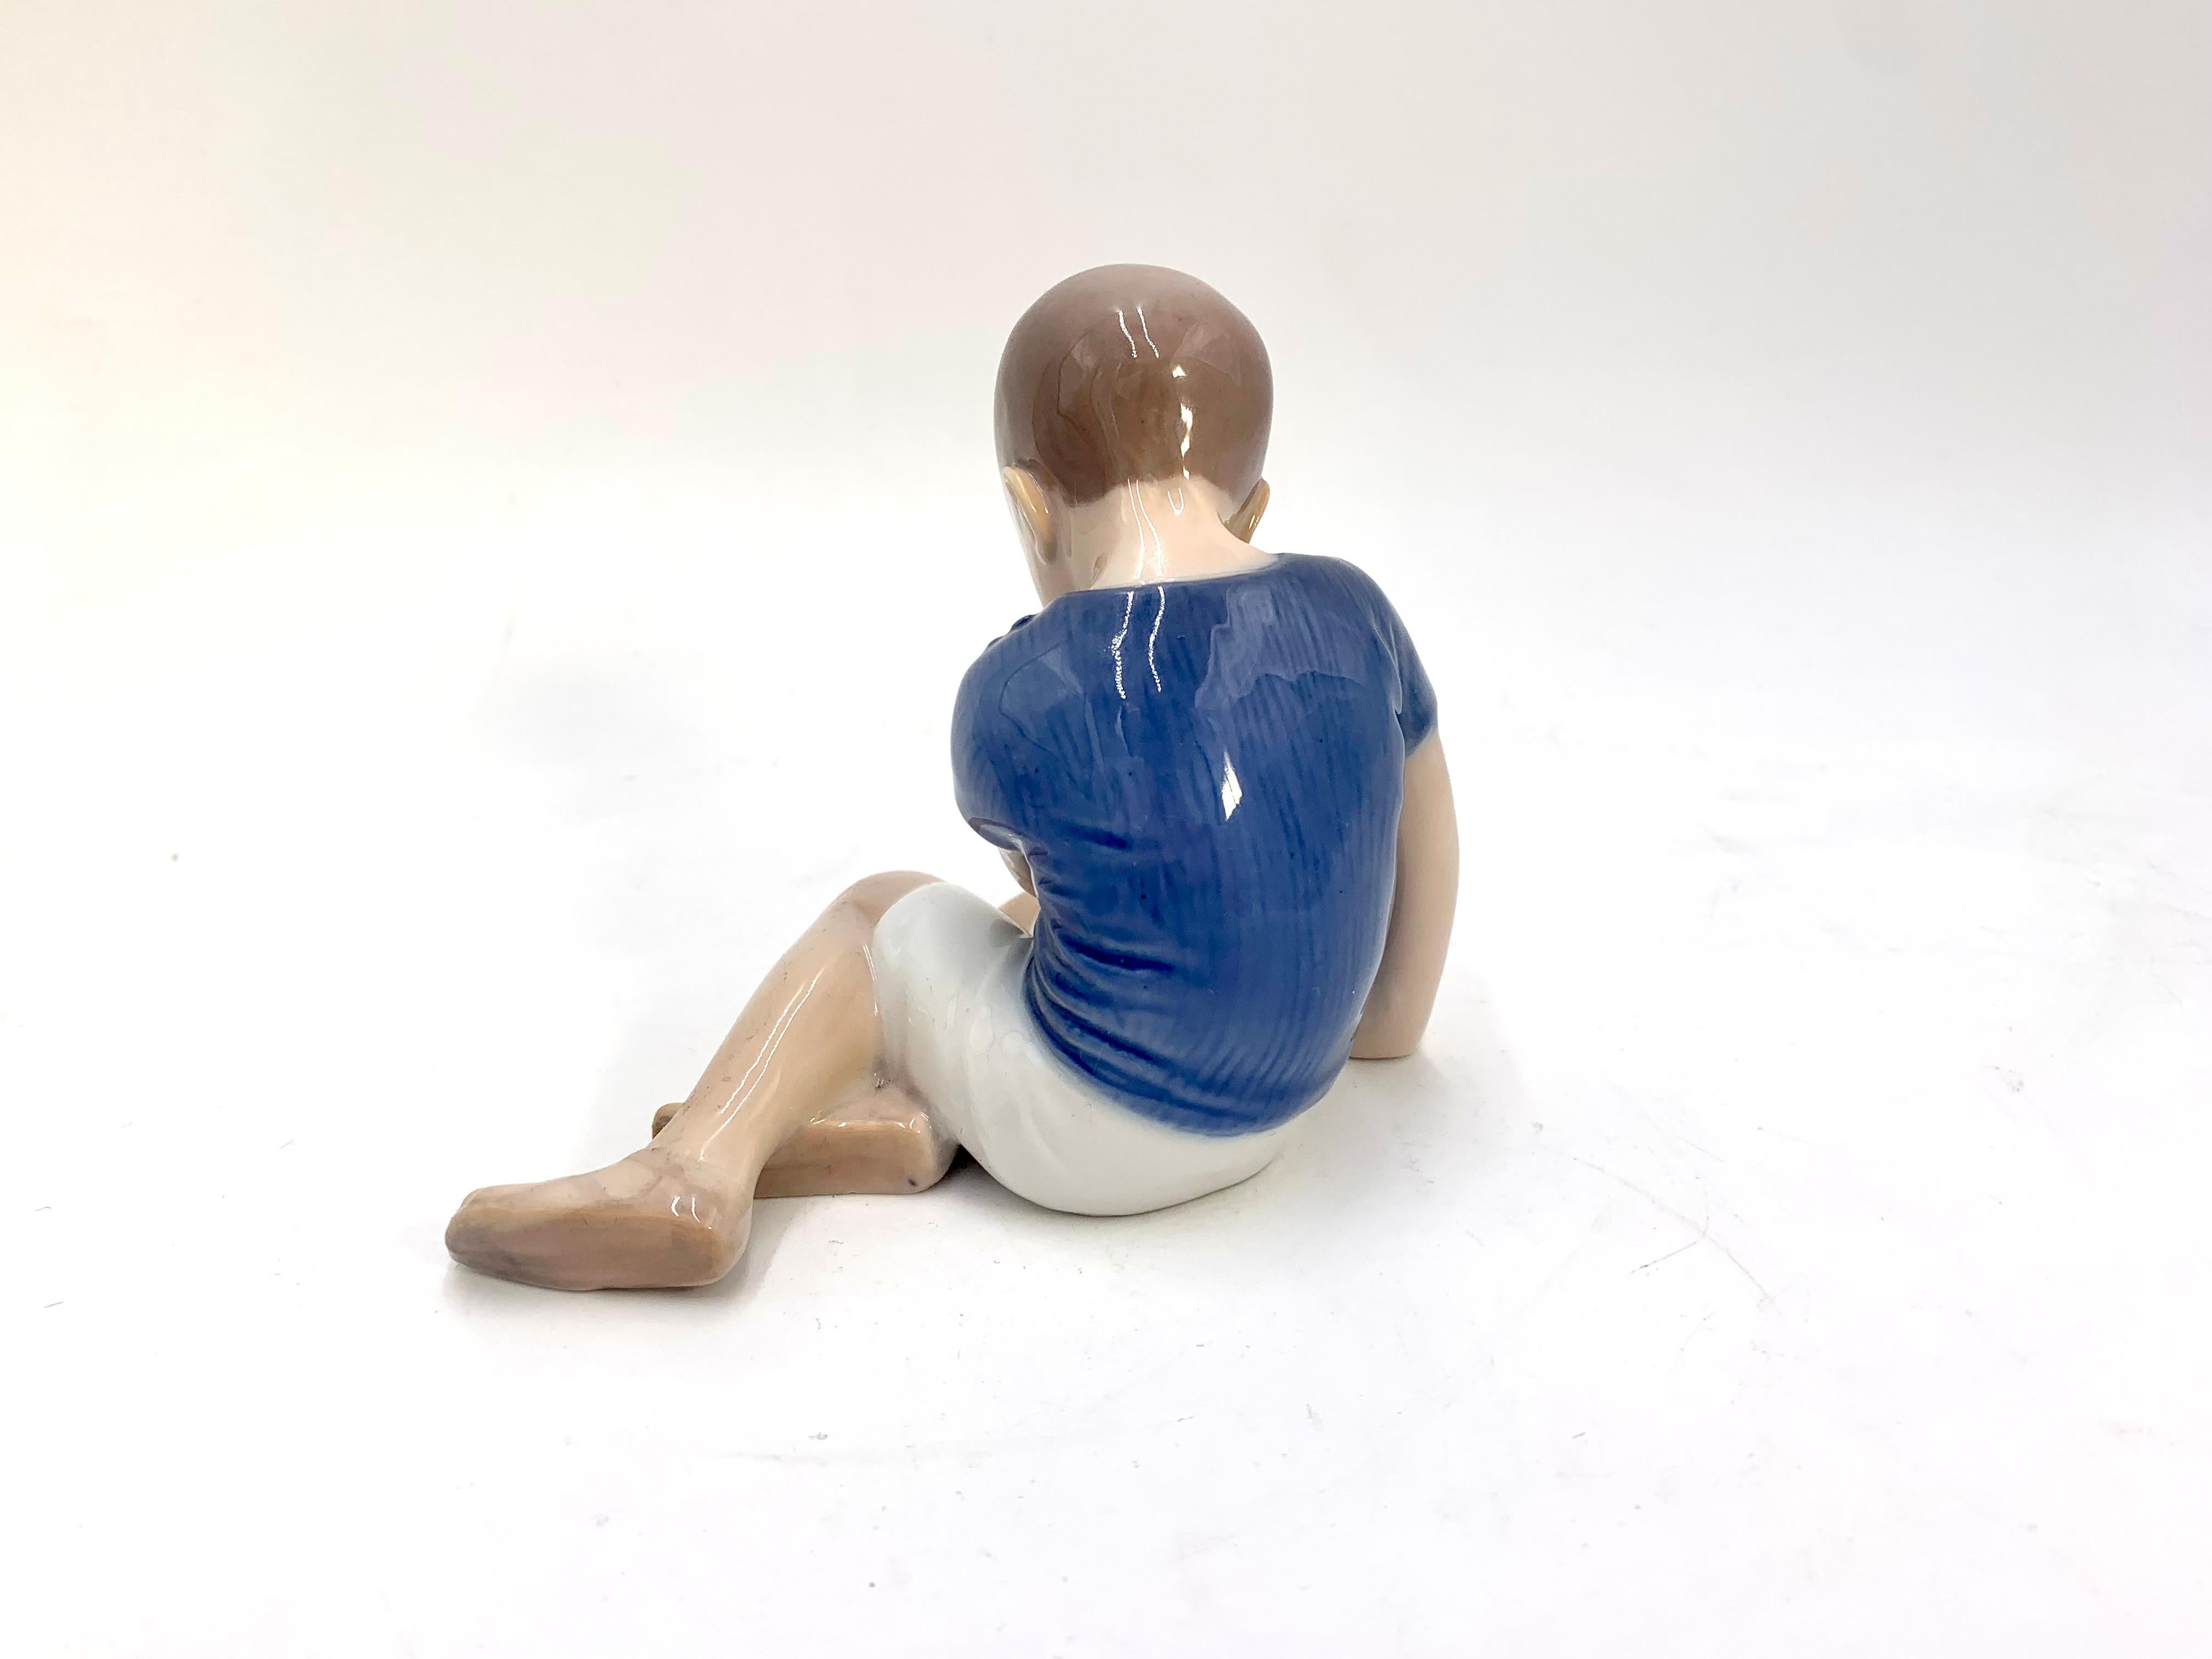 Mid-Century Modern Porcelain Figurine of a Boy, Bing & Grondahl, Denmark, 1950s / 1960s